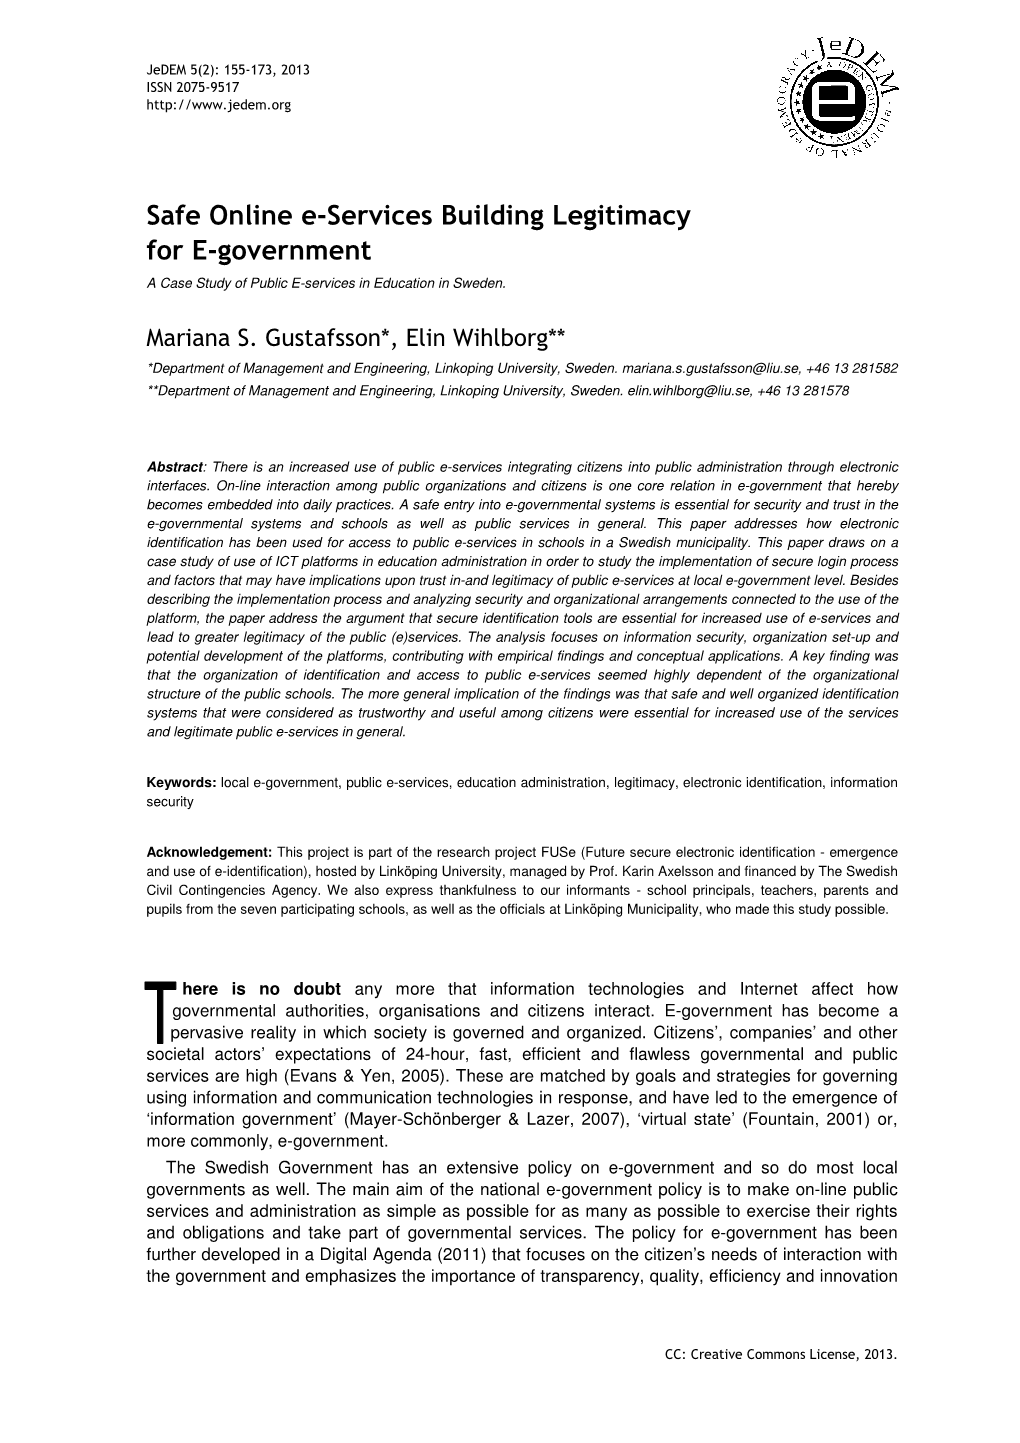 Safe Online E-Services Building Legitimacy for E-Government a Case Study of Public E-Services in Education in Sweden